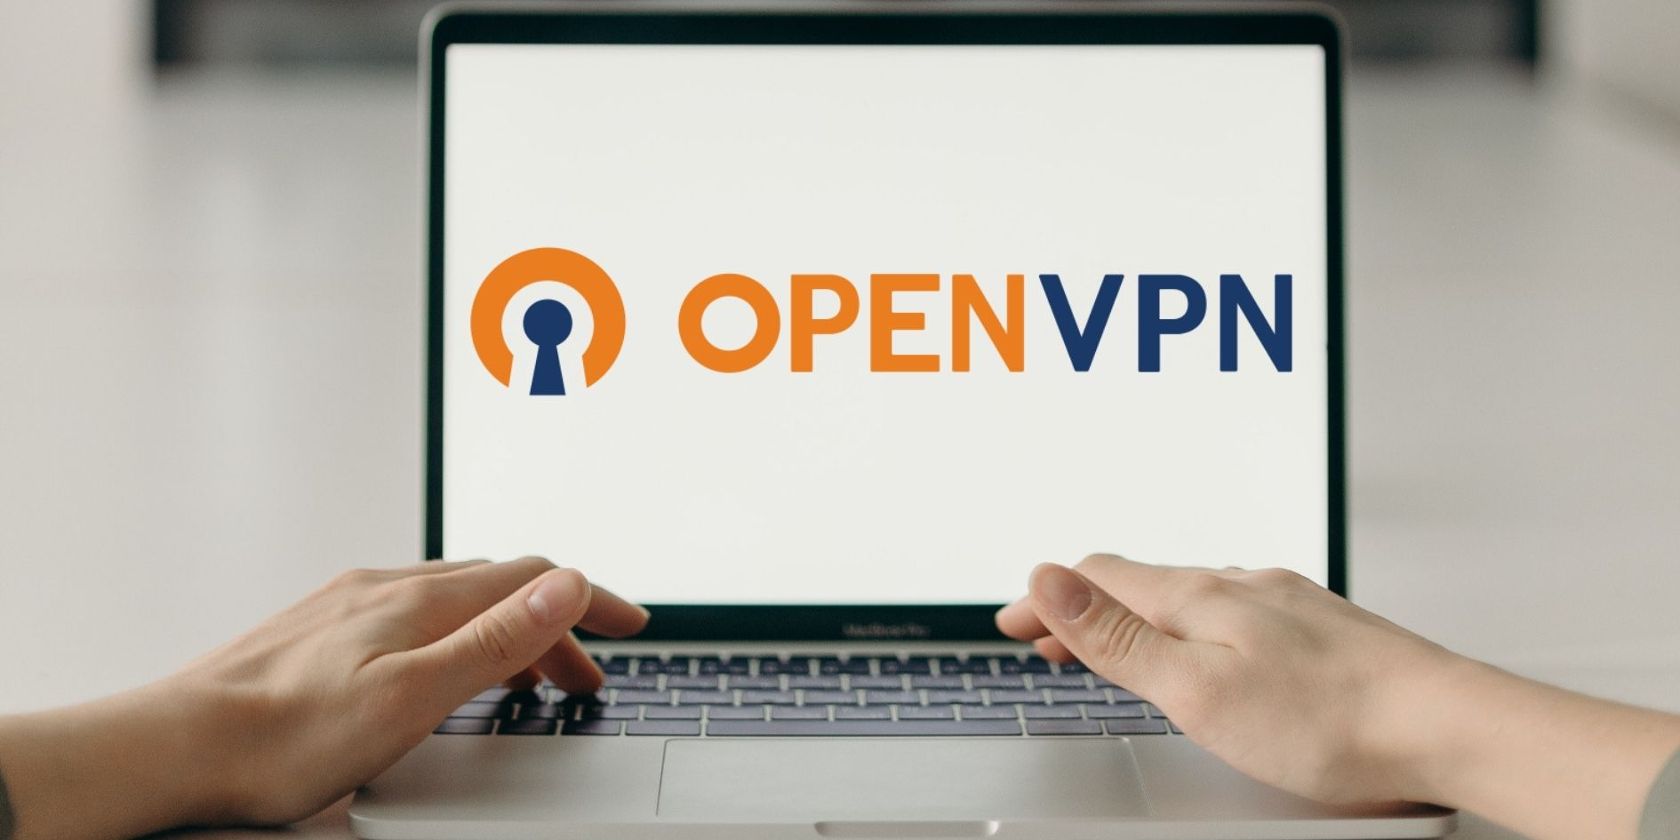 openvpn logo on laptop screen